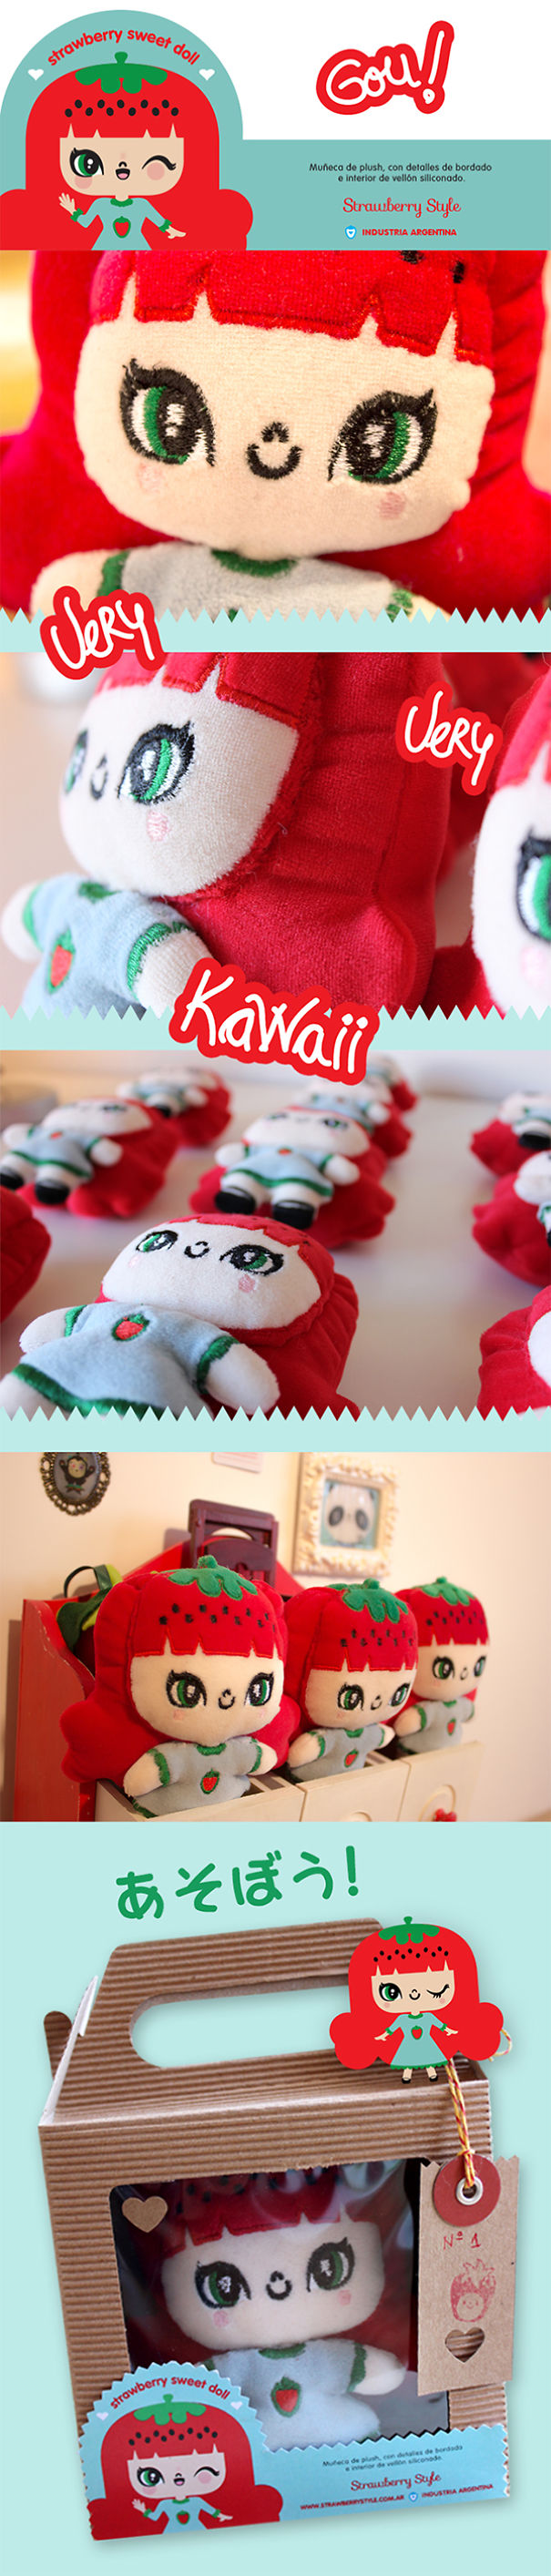 I Make Illustration Kawaii Cute Stuff Through My Brand "strawberry Style"